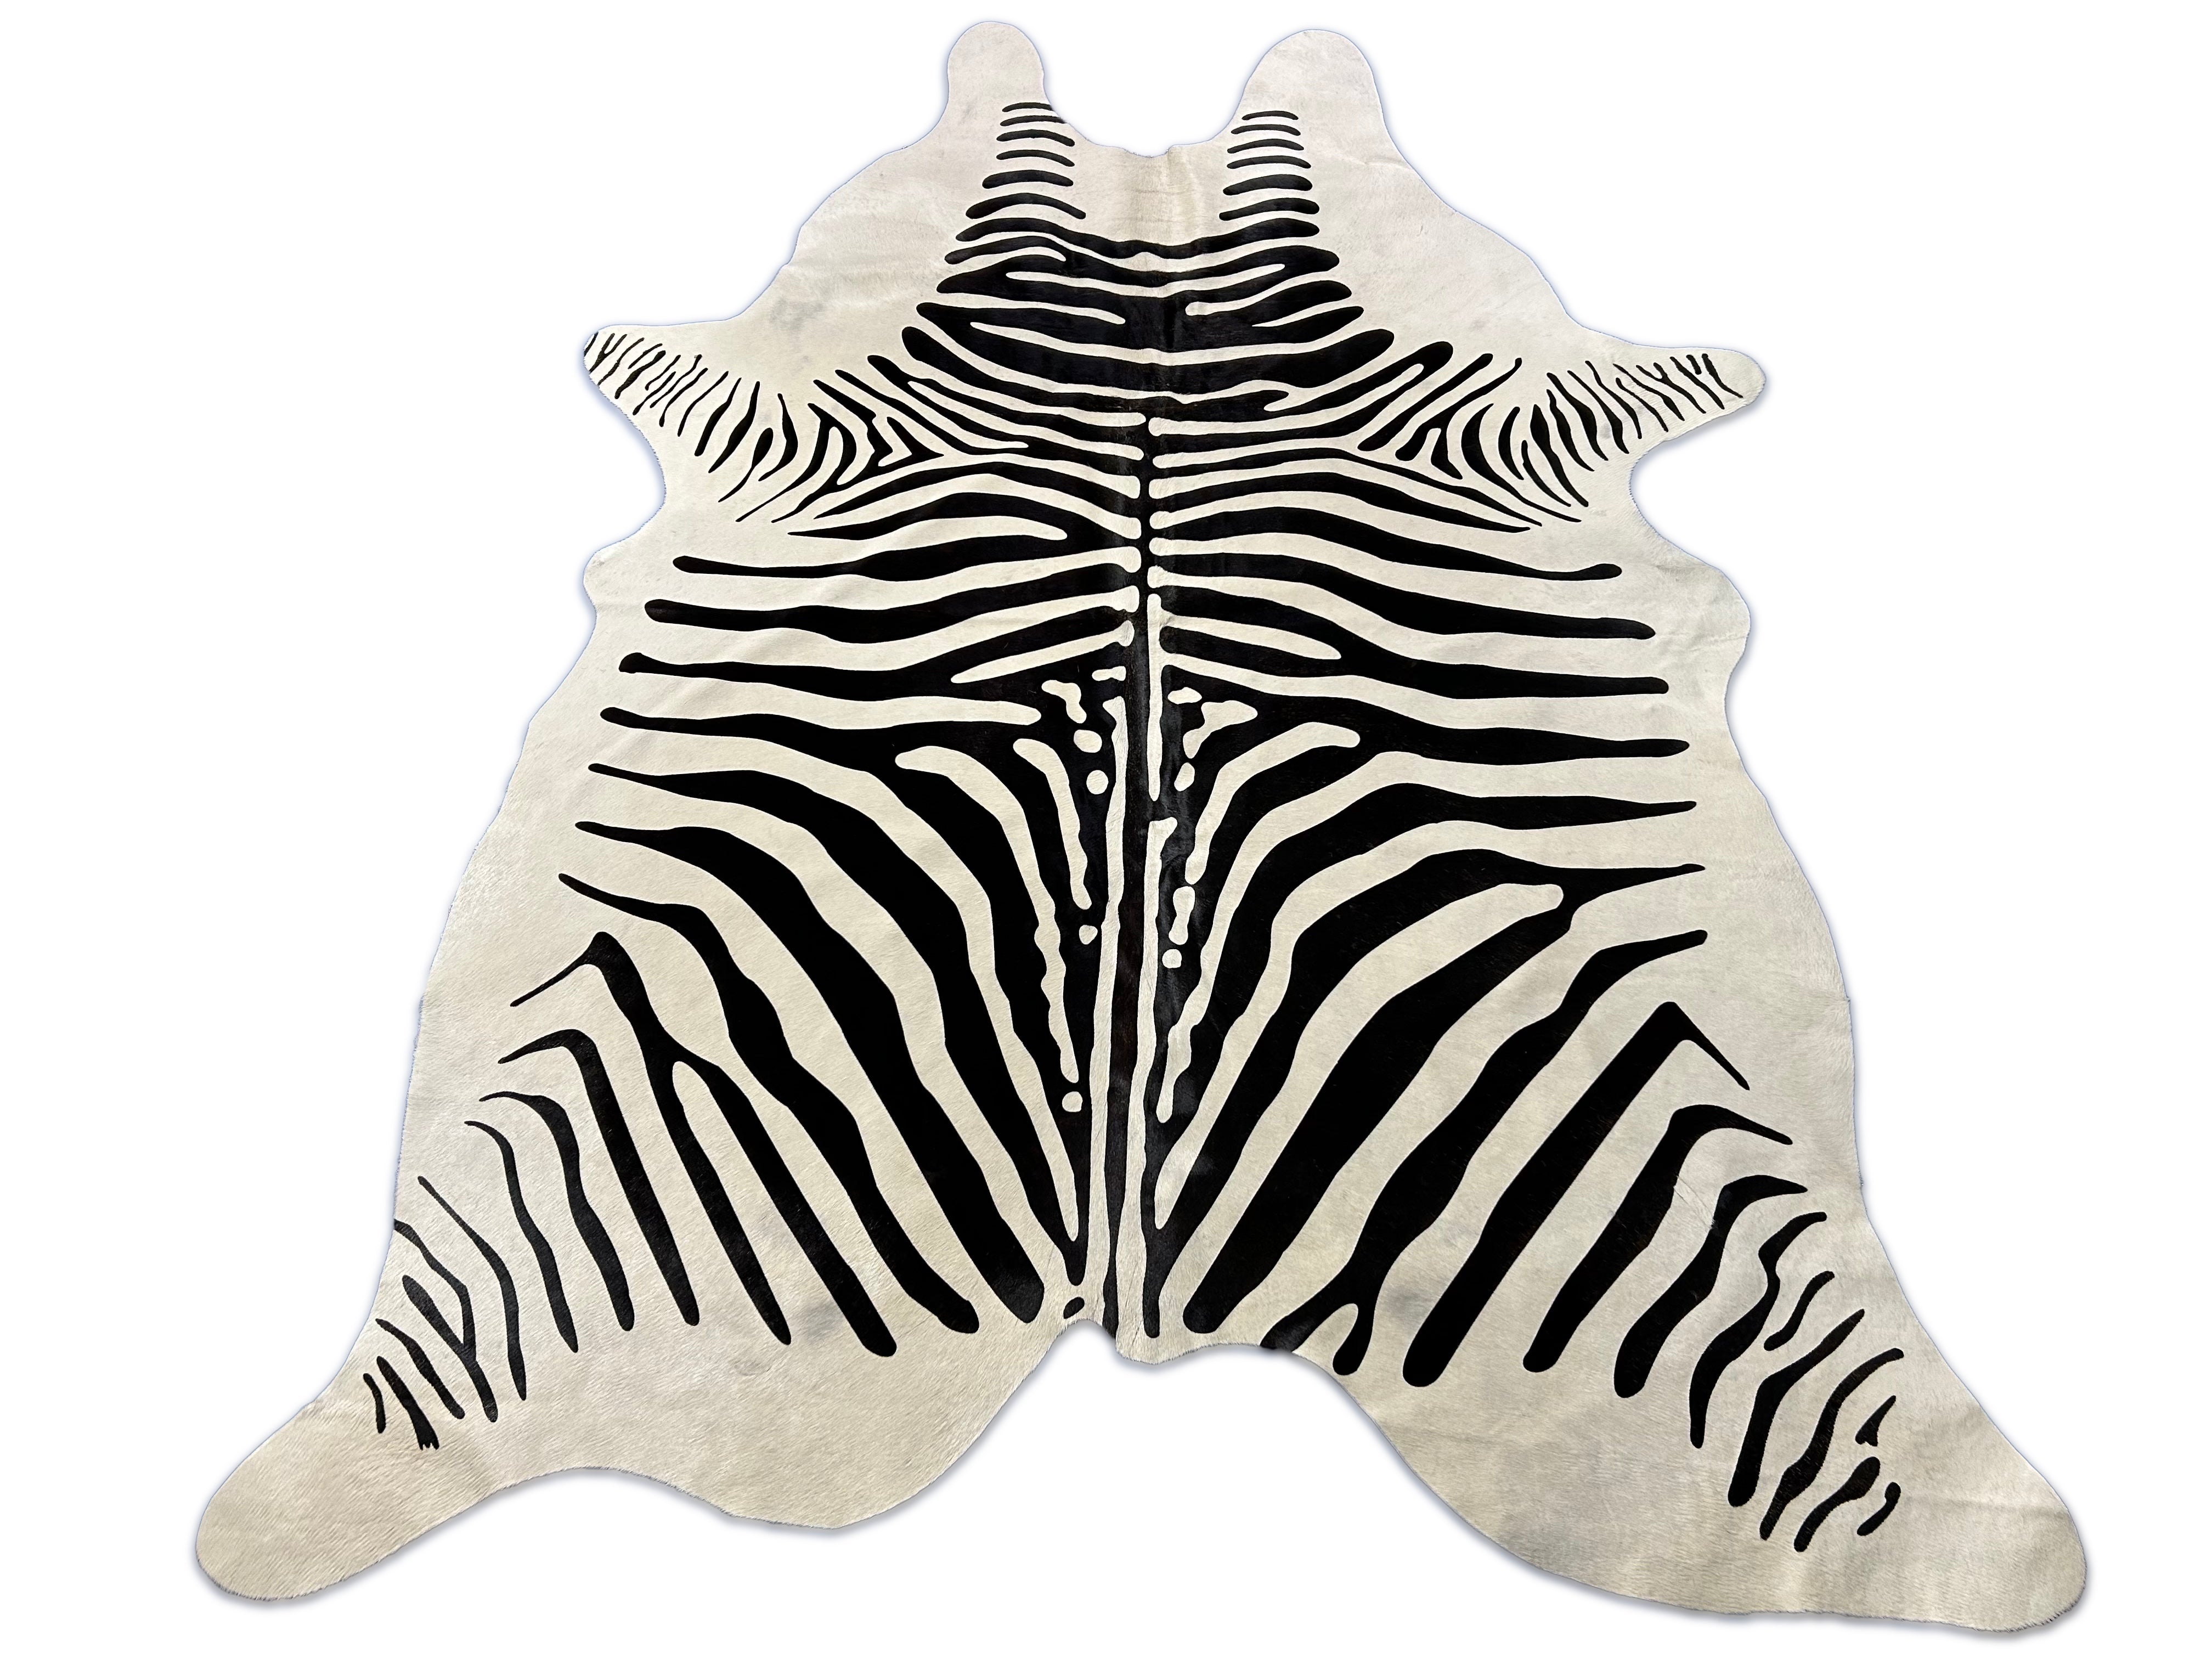 Black & White Zebra Print Cowhide Rug (1 patch) Size: 7.5x6 feet D-045